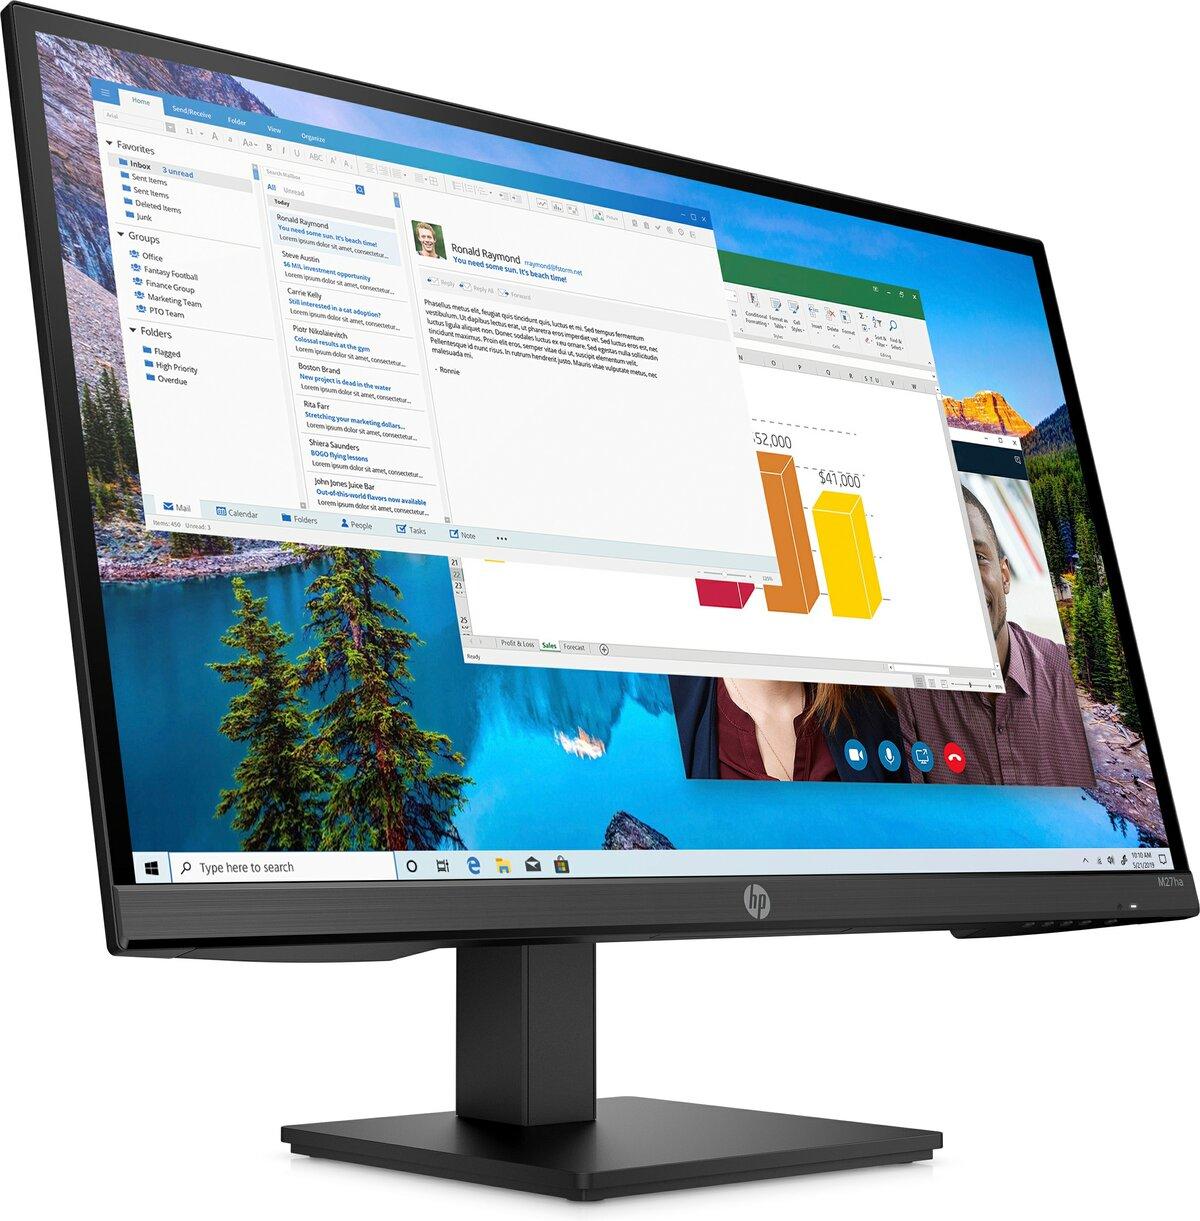 HP P22G5 Monitor | Unique Computers HP Amplify Power Partner